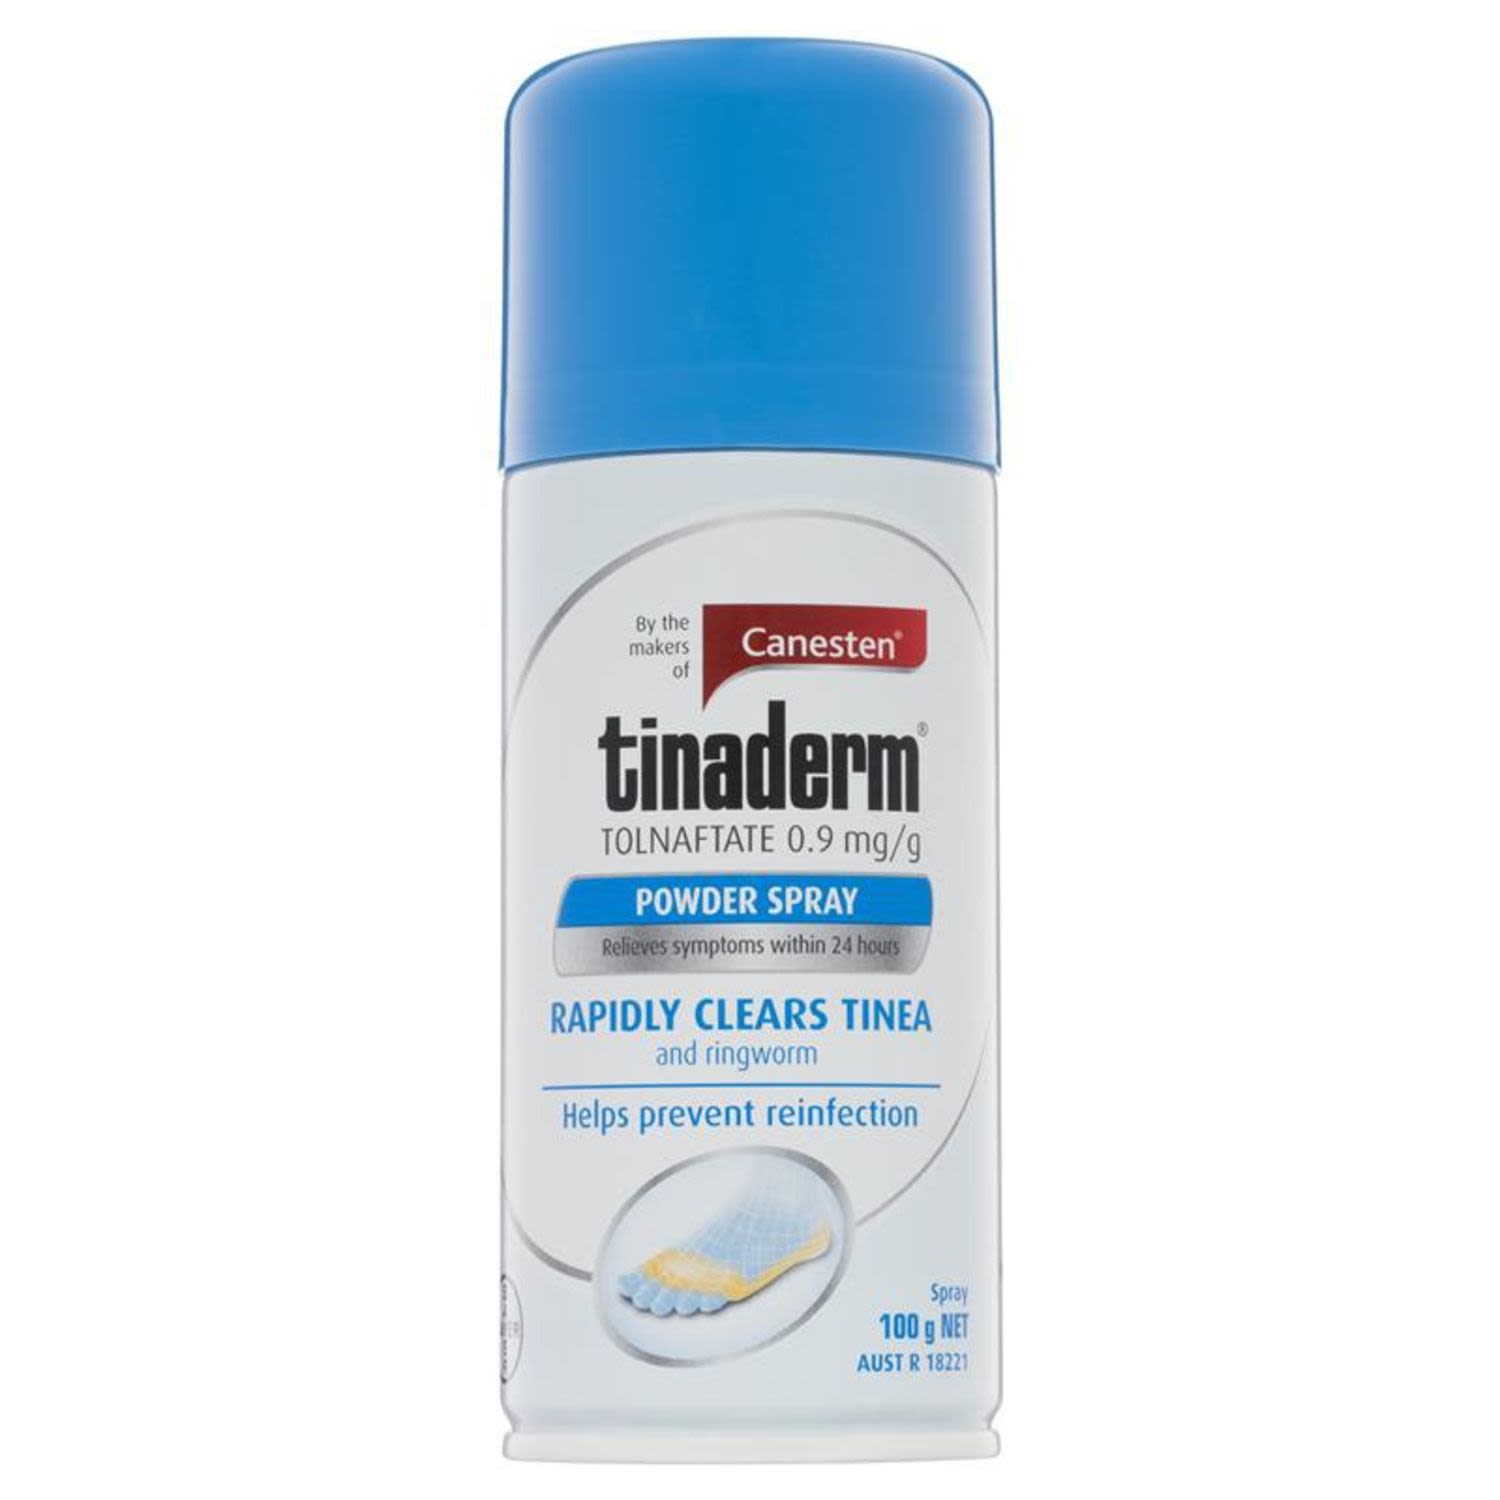 Canesten Tinaderm Antifungal Powder Spray, 100 Gram